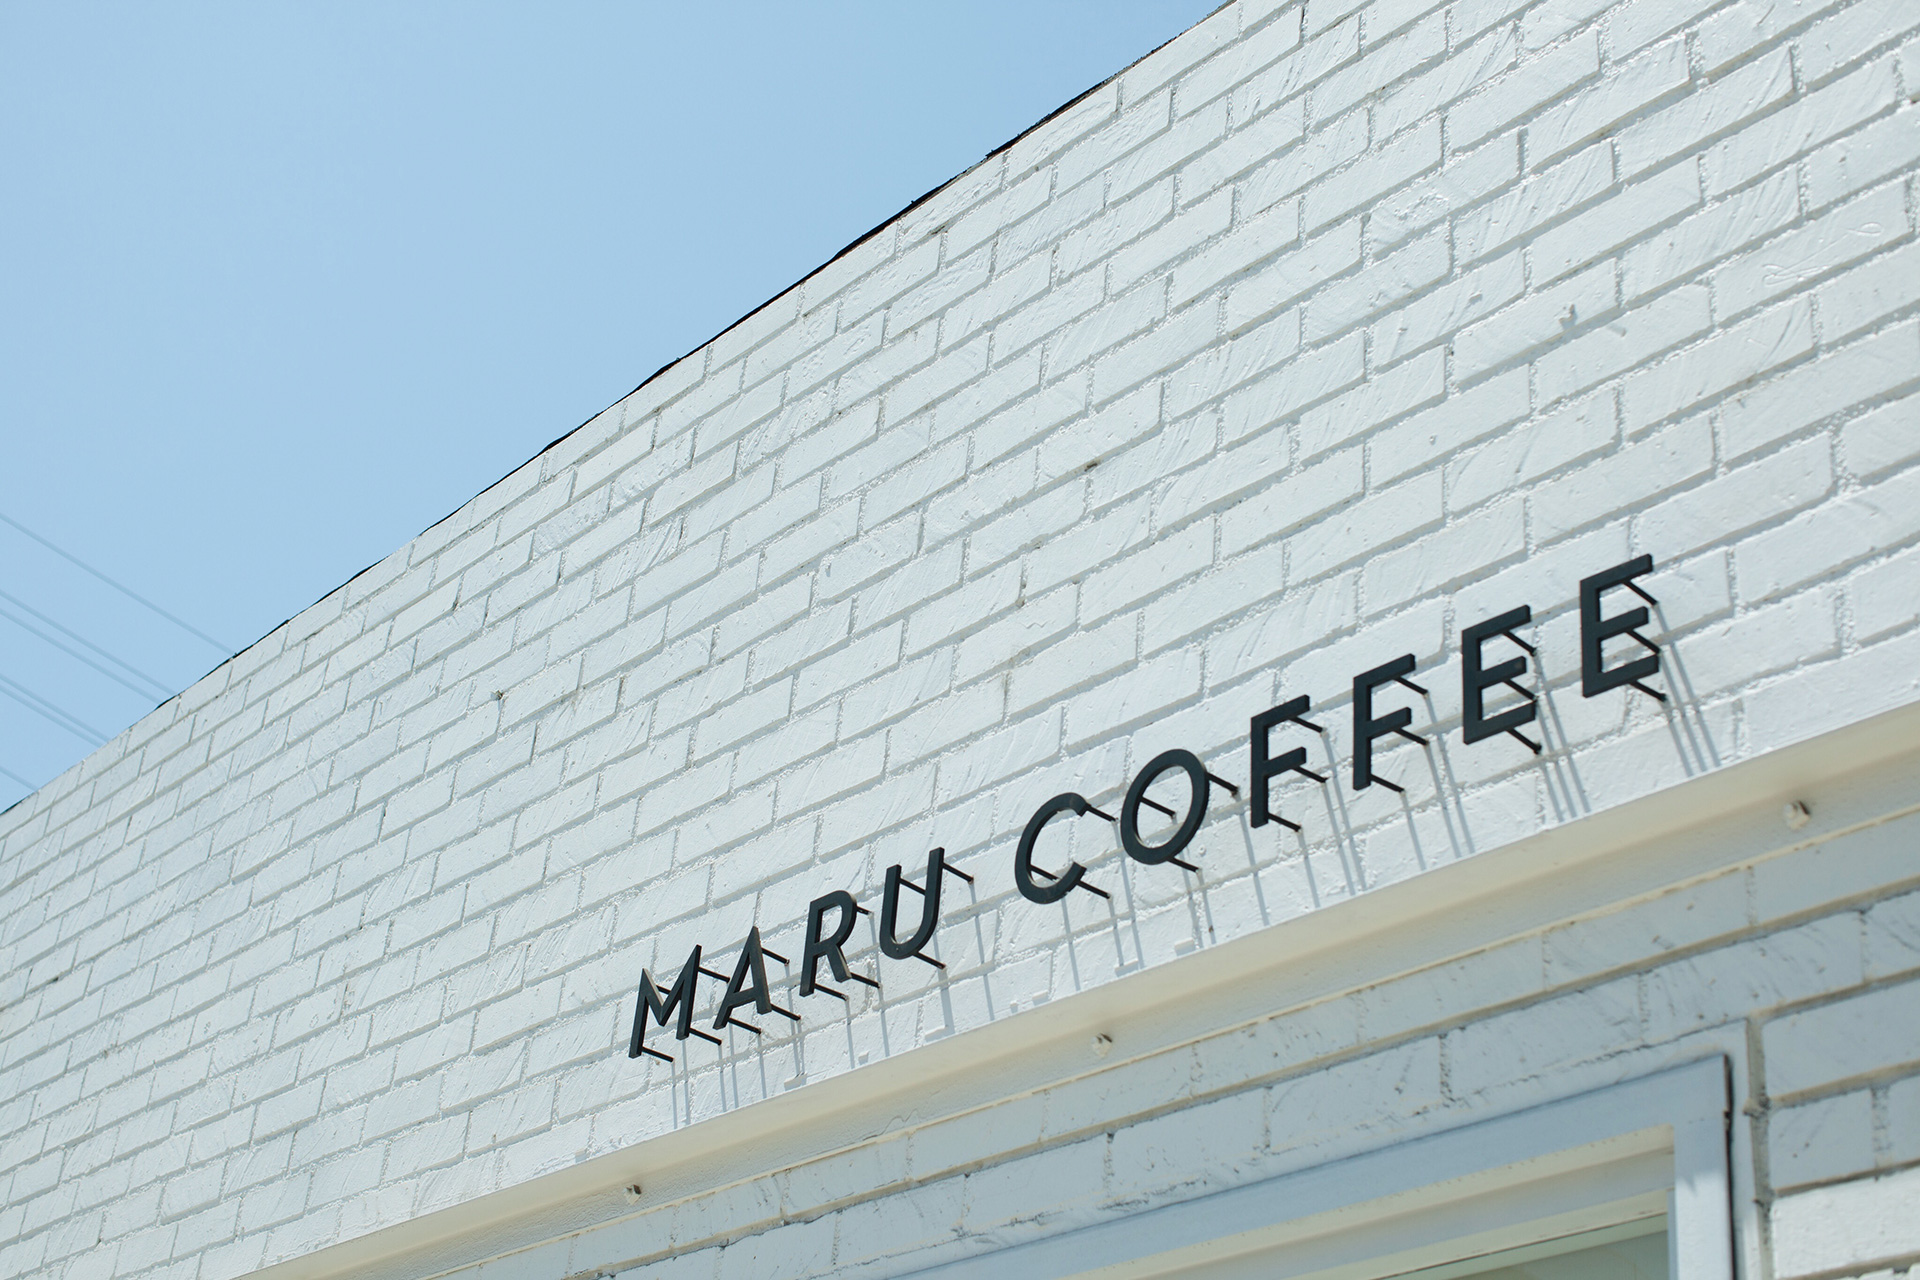 Maru cafe near me